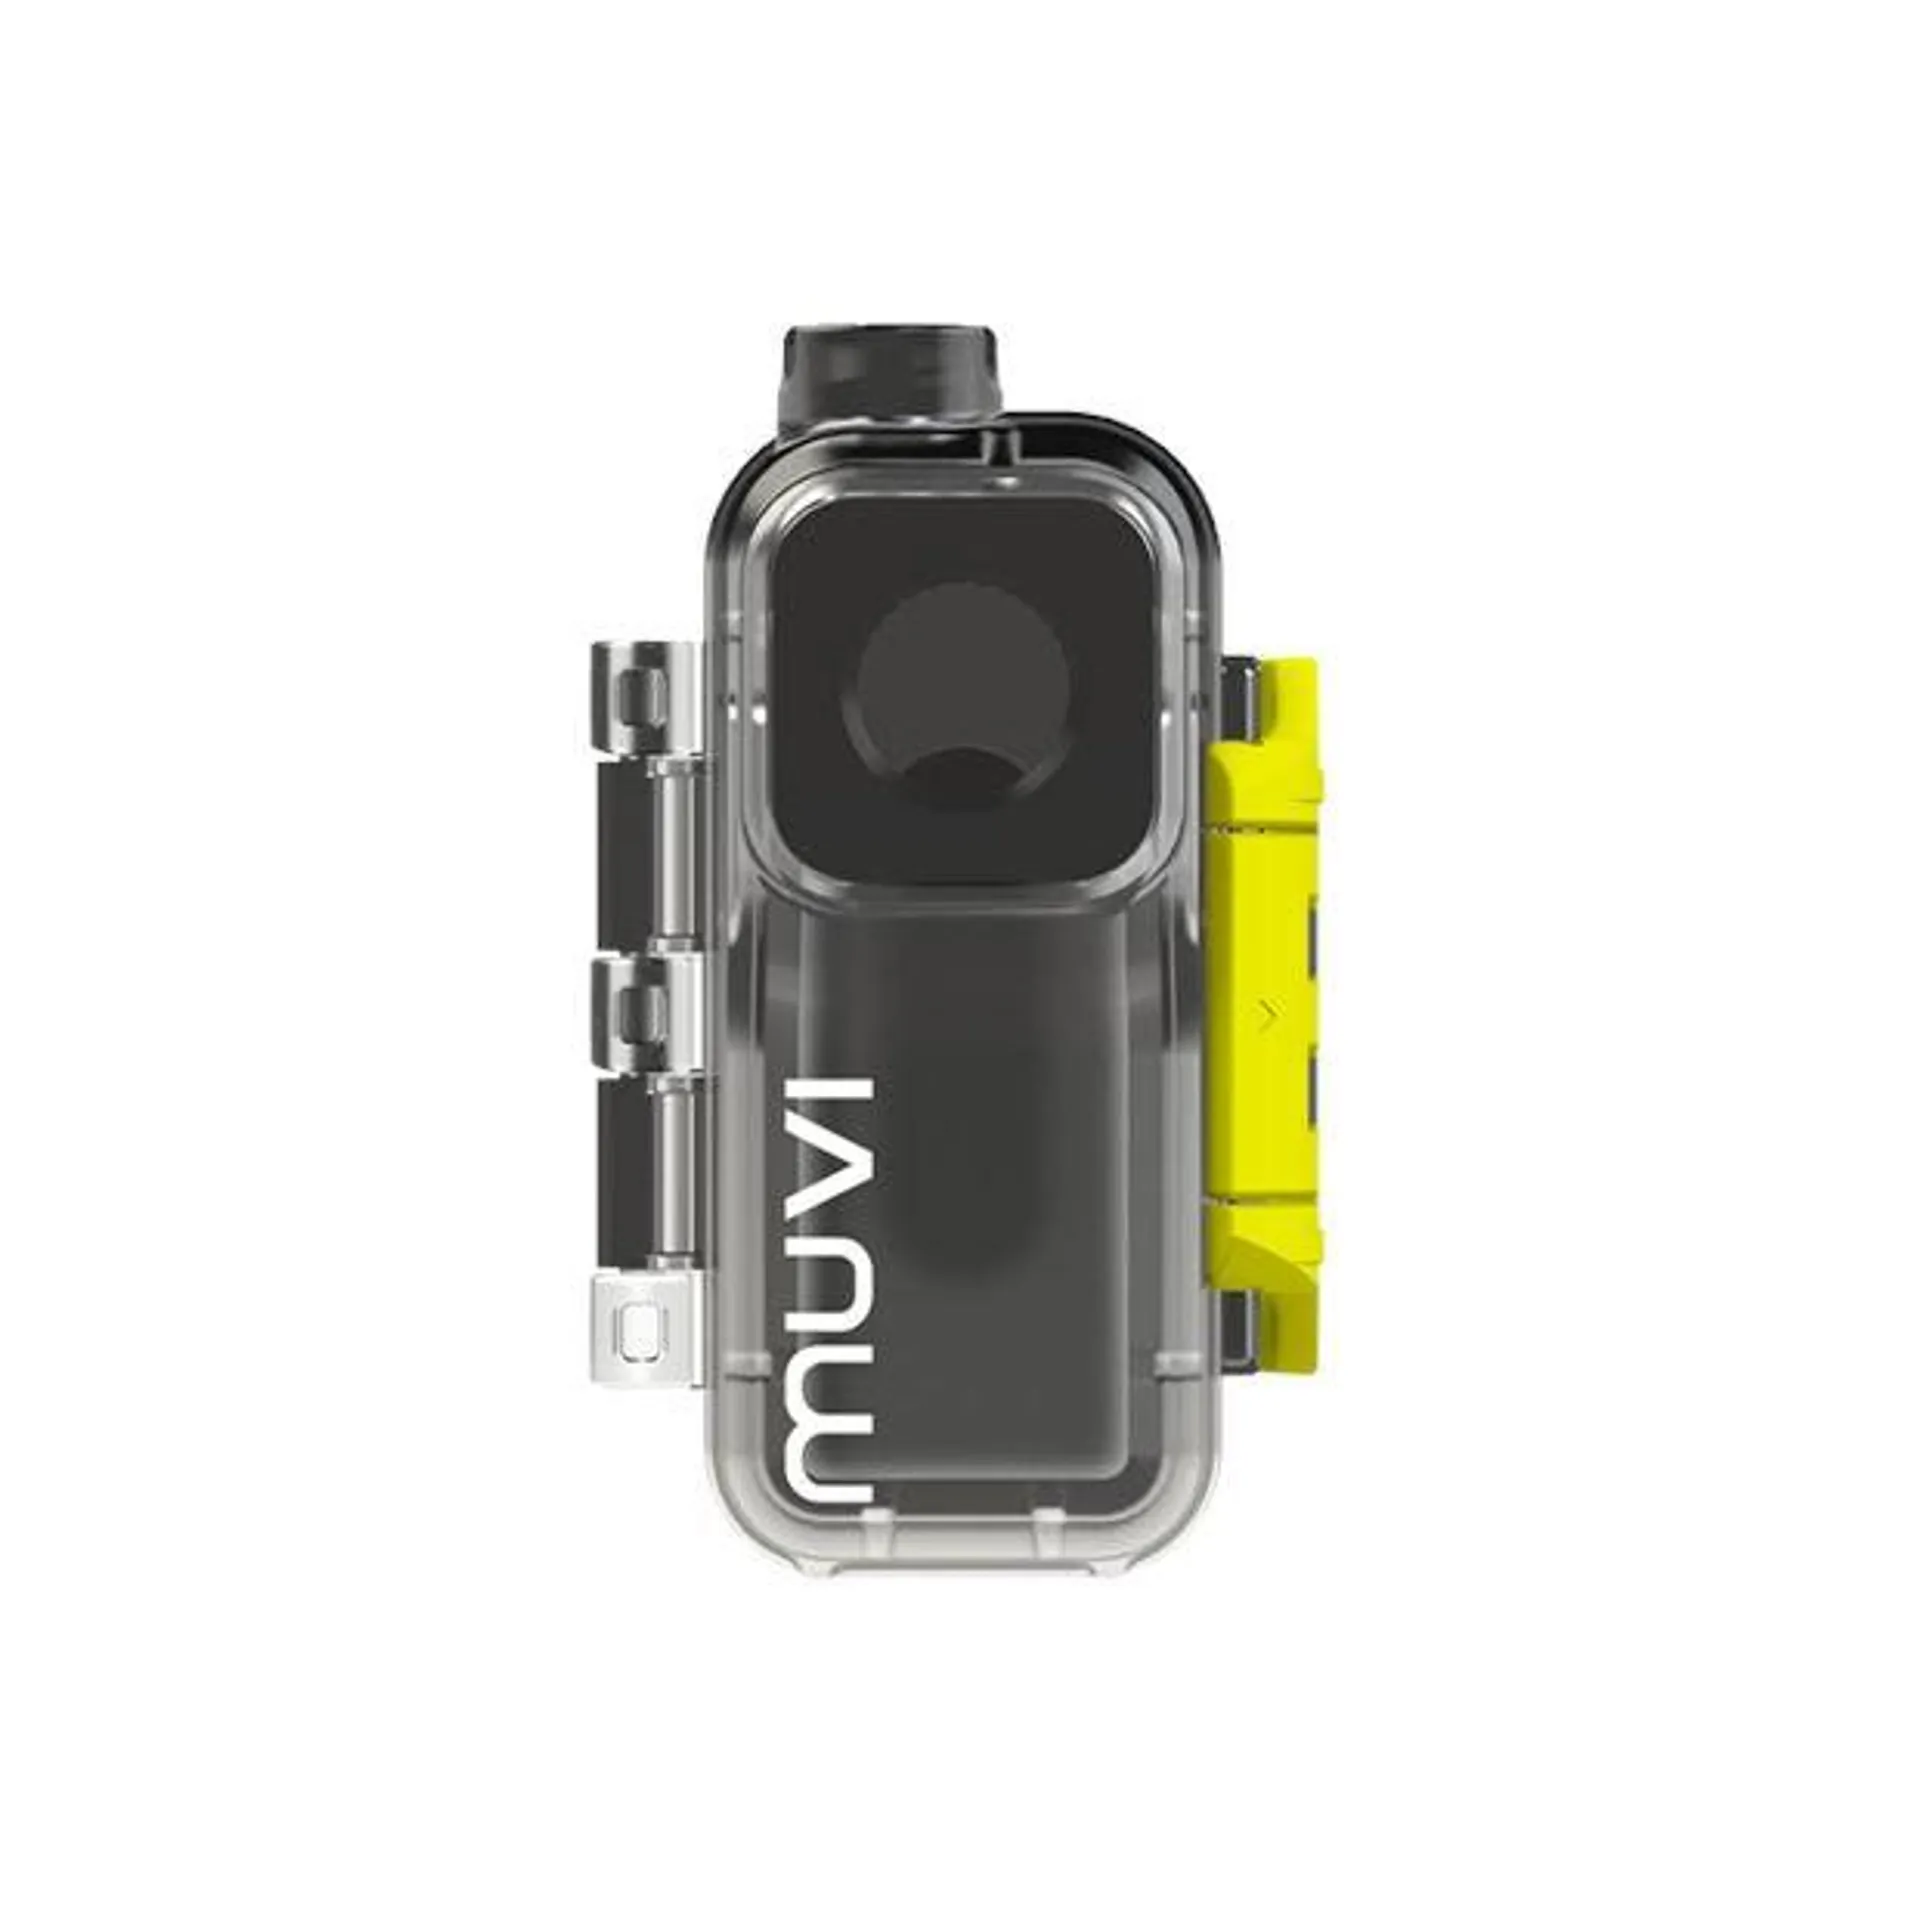 Veho Muvi Micro HD Waterproof Case - Yellow